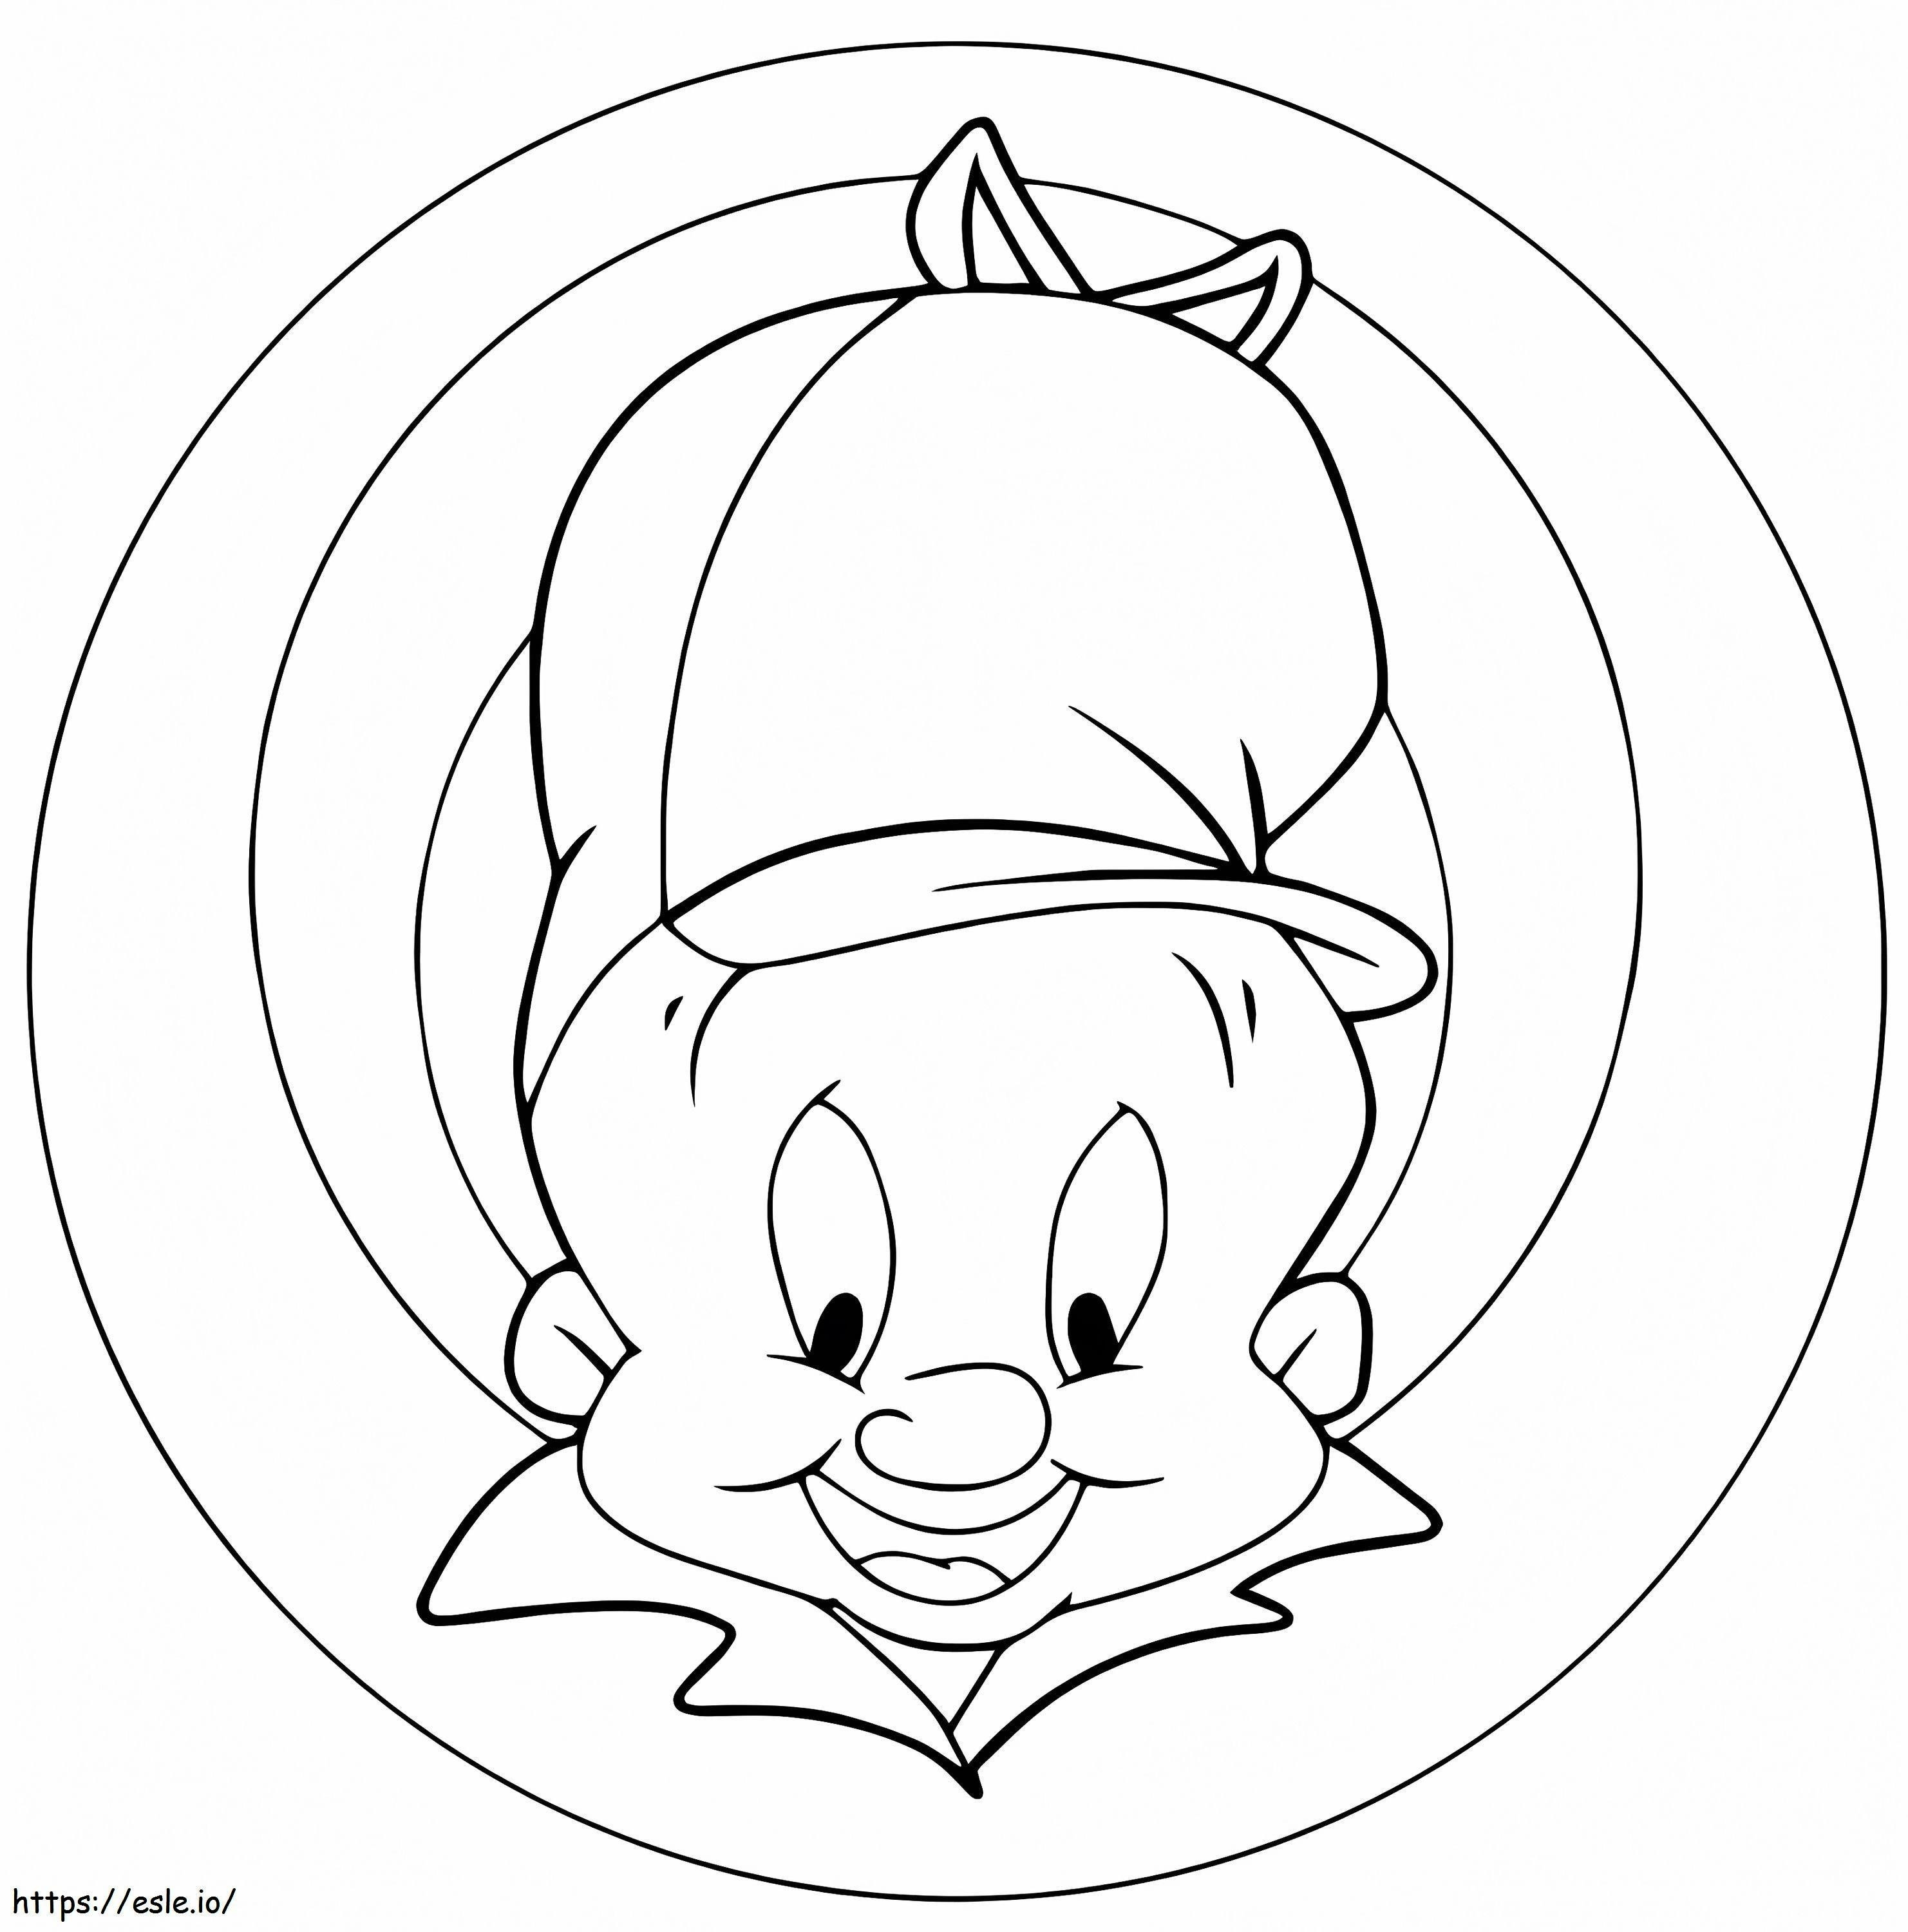 Coloriage Elmer Fudd des Looney Tunes à imprimer dessin